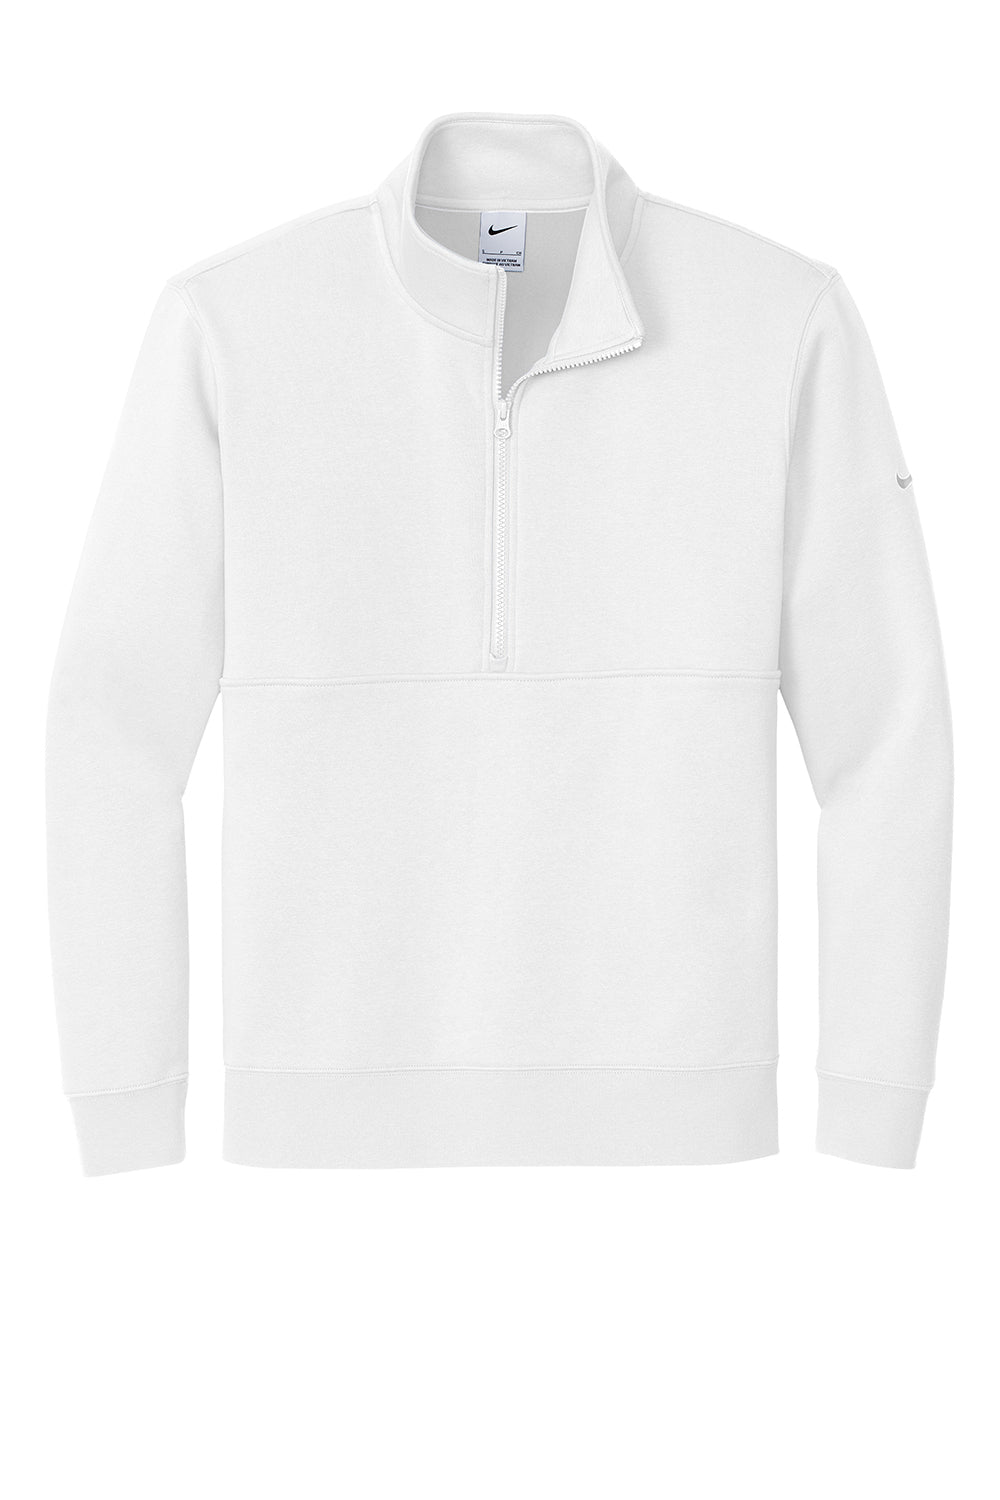 Nike NKDX6718 Mens Club Fleece 1/4 Zip Sweatshirt White Flat Front